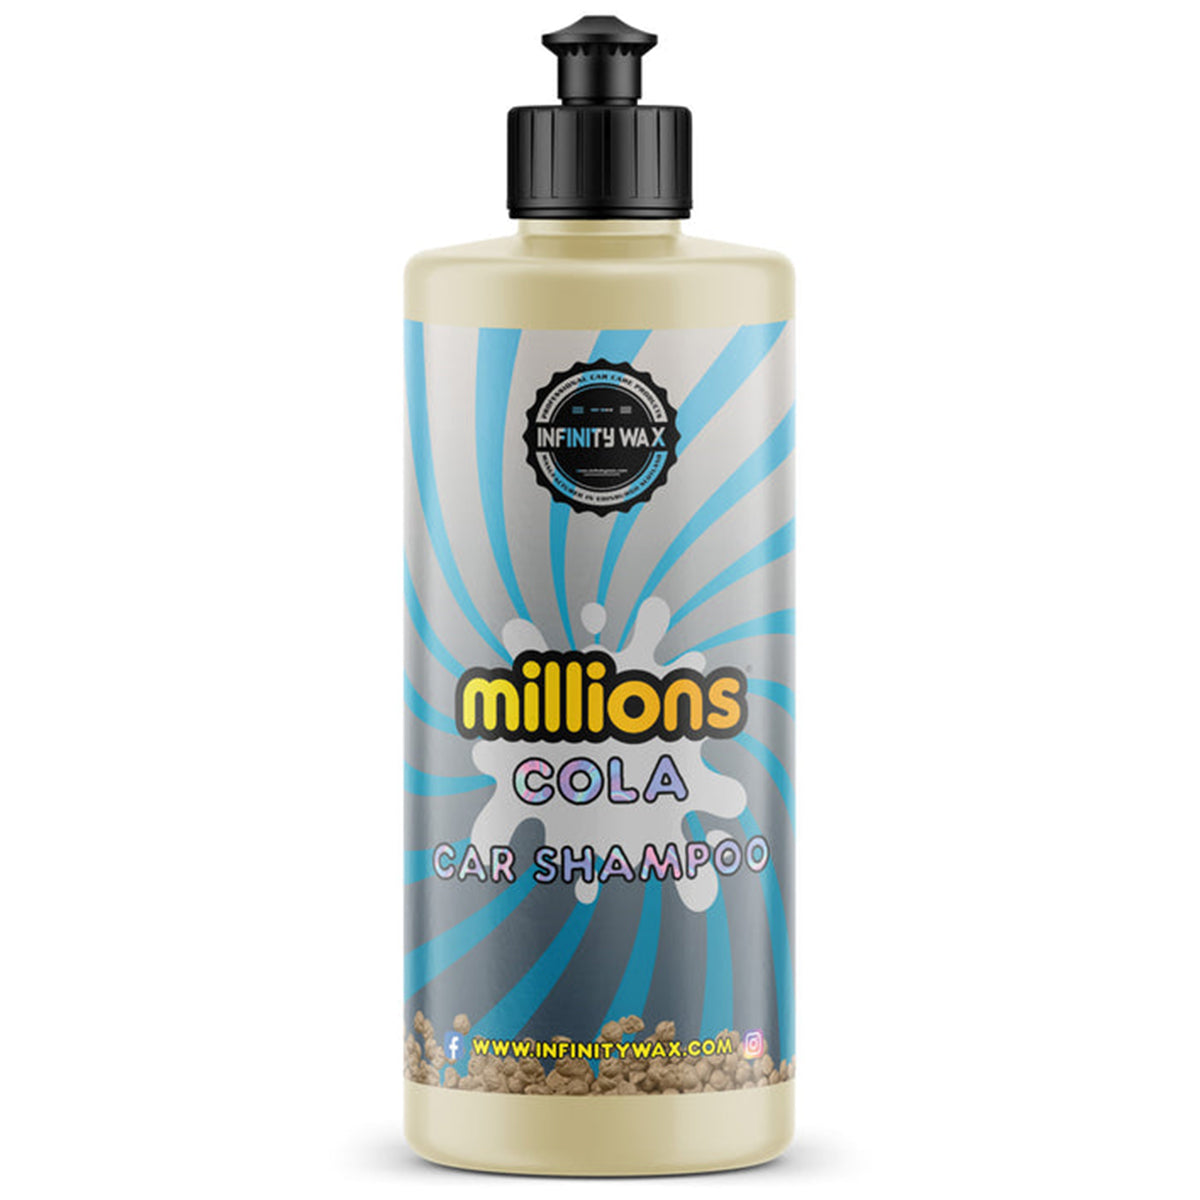 Infinity Wax Millions Cola Shampoo